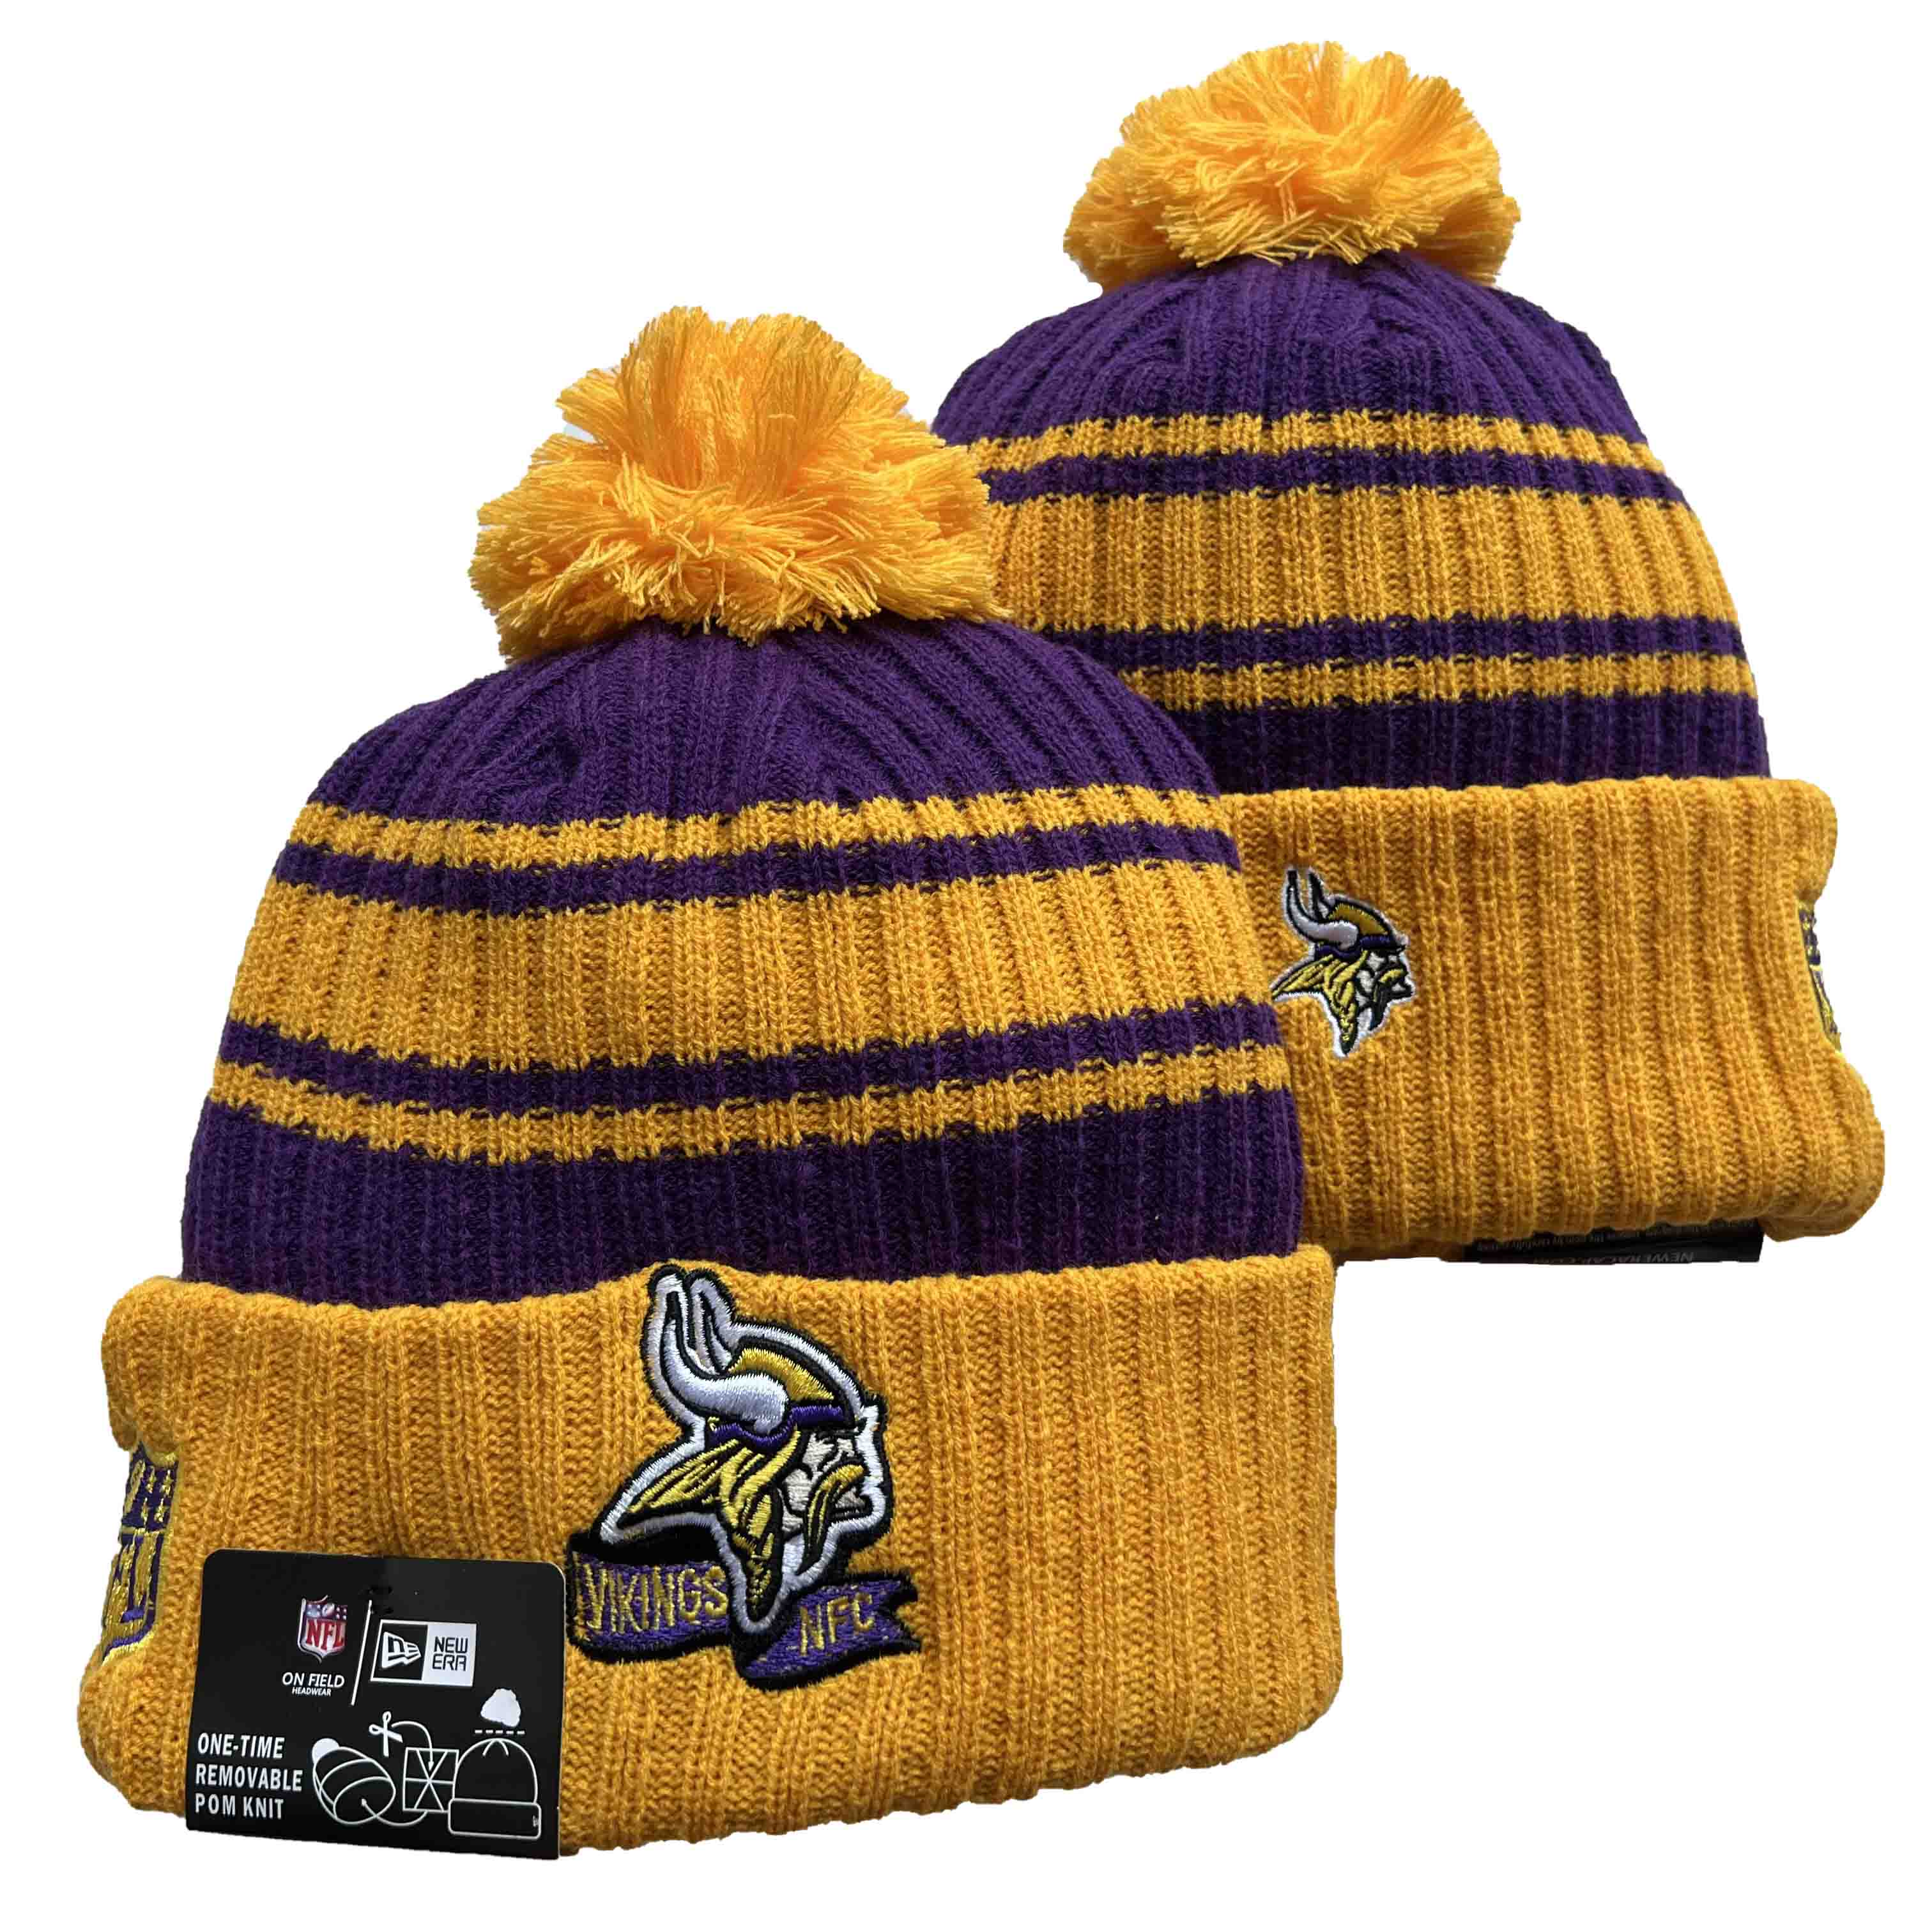 NFL Minnesota Vikings Beanies Knit Hats-YD1265